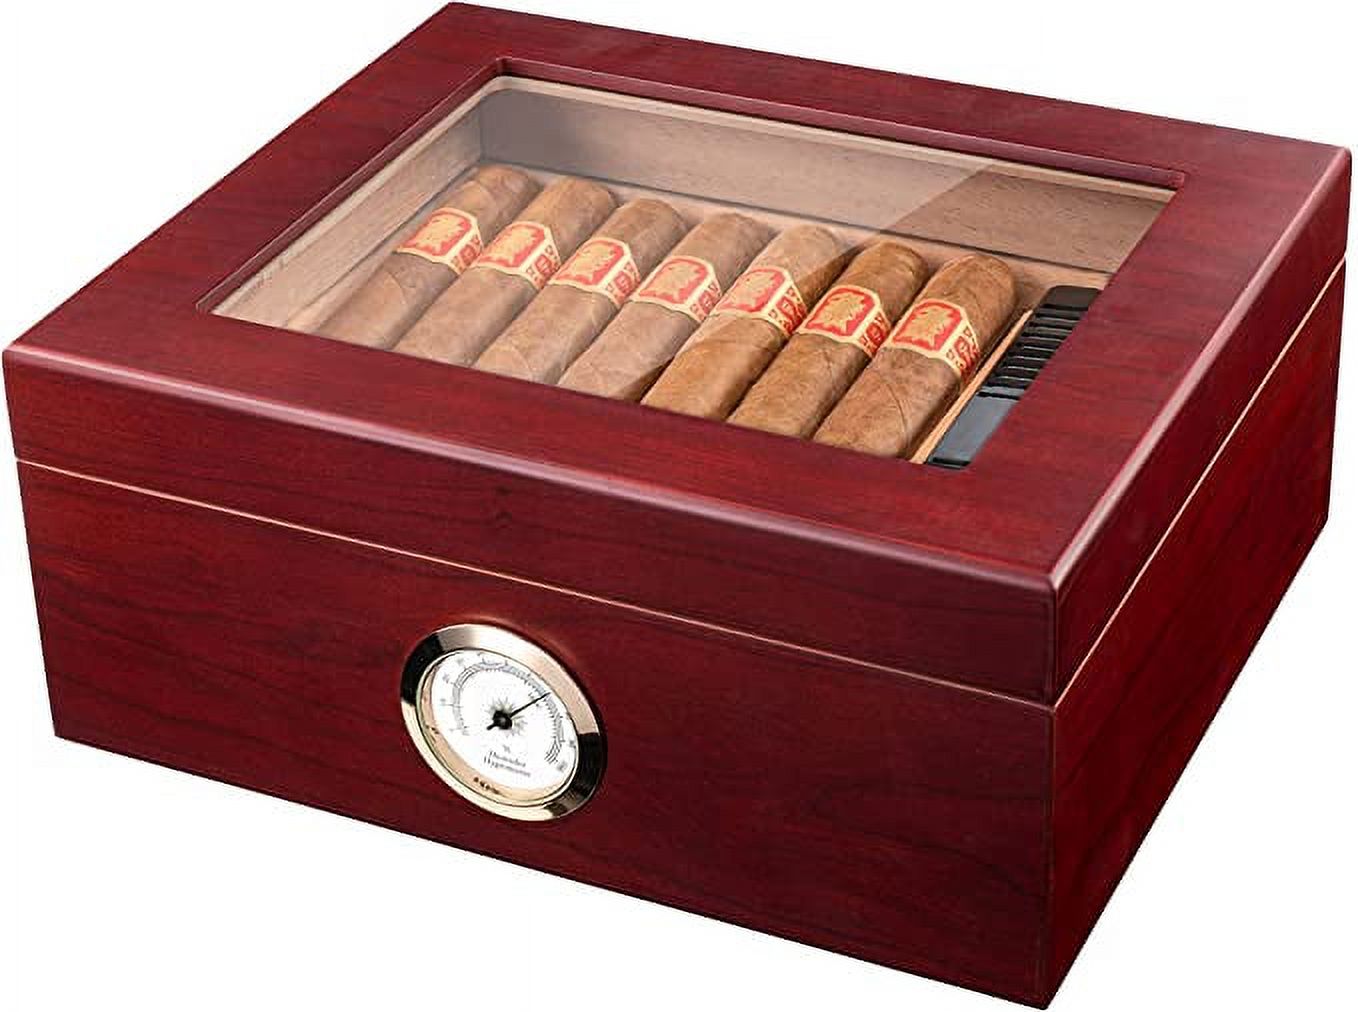 Mantello Cigar Humidors- Royal Glass-Top Humidor Cigar Box - Gifts for Men- Cigar Box for 25-50 Cigars with Hygrometer & Divider - Spanish Cedar Wood Interior, Cigar Accessories for Men - image 1 of 7